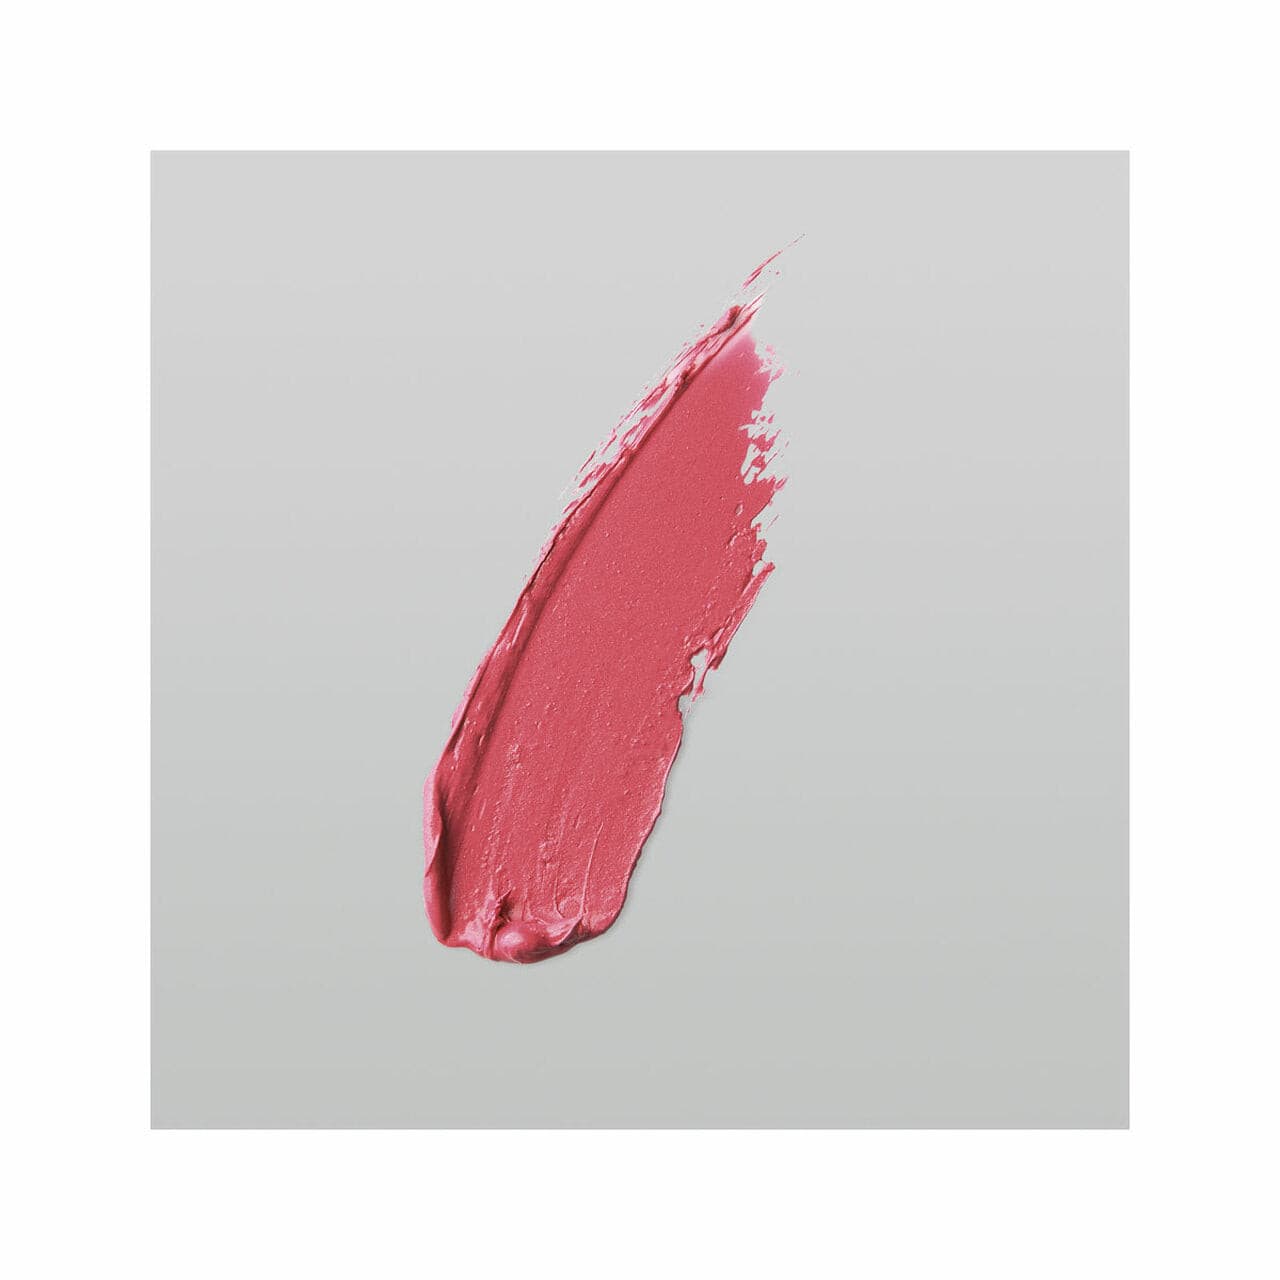 Antipodes Moisture-Boost Natural Lipstick 4g - Dusky Sound Pink.